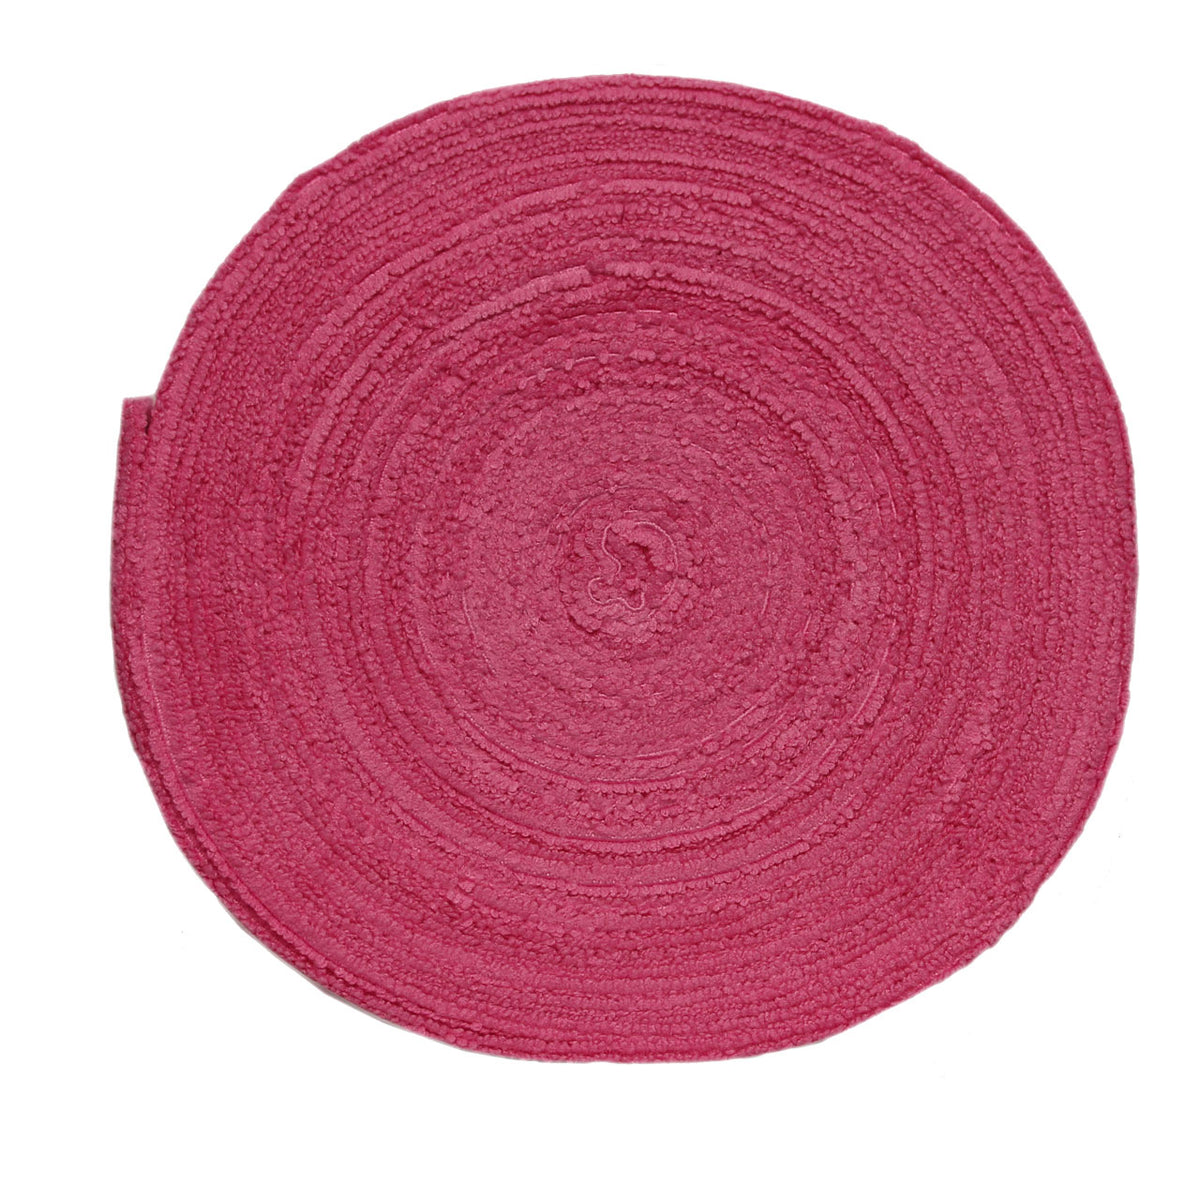 Yehlex 20 Racket Towel Roll (Pink)